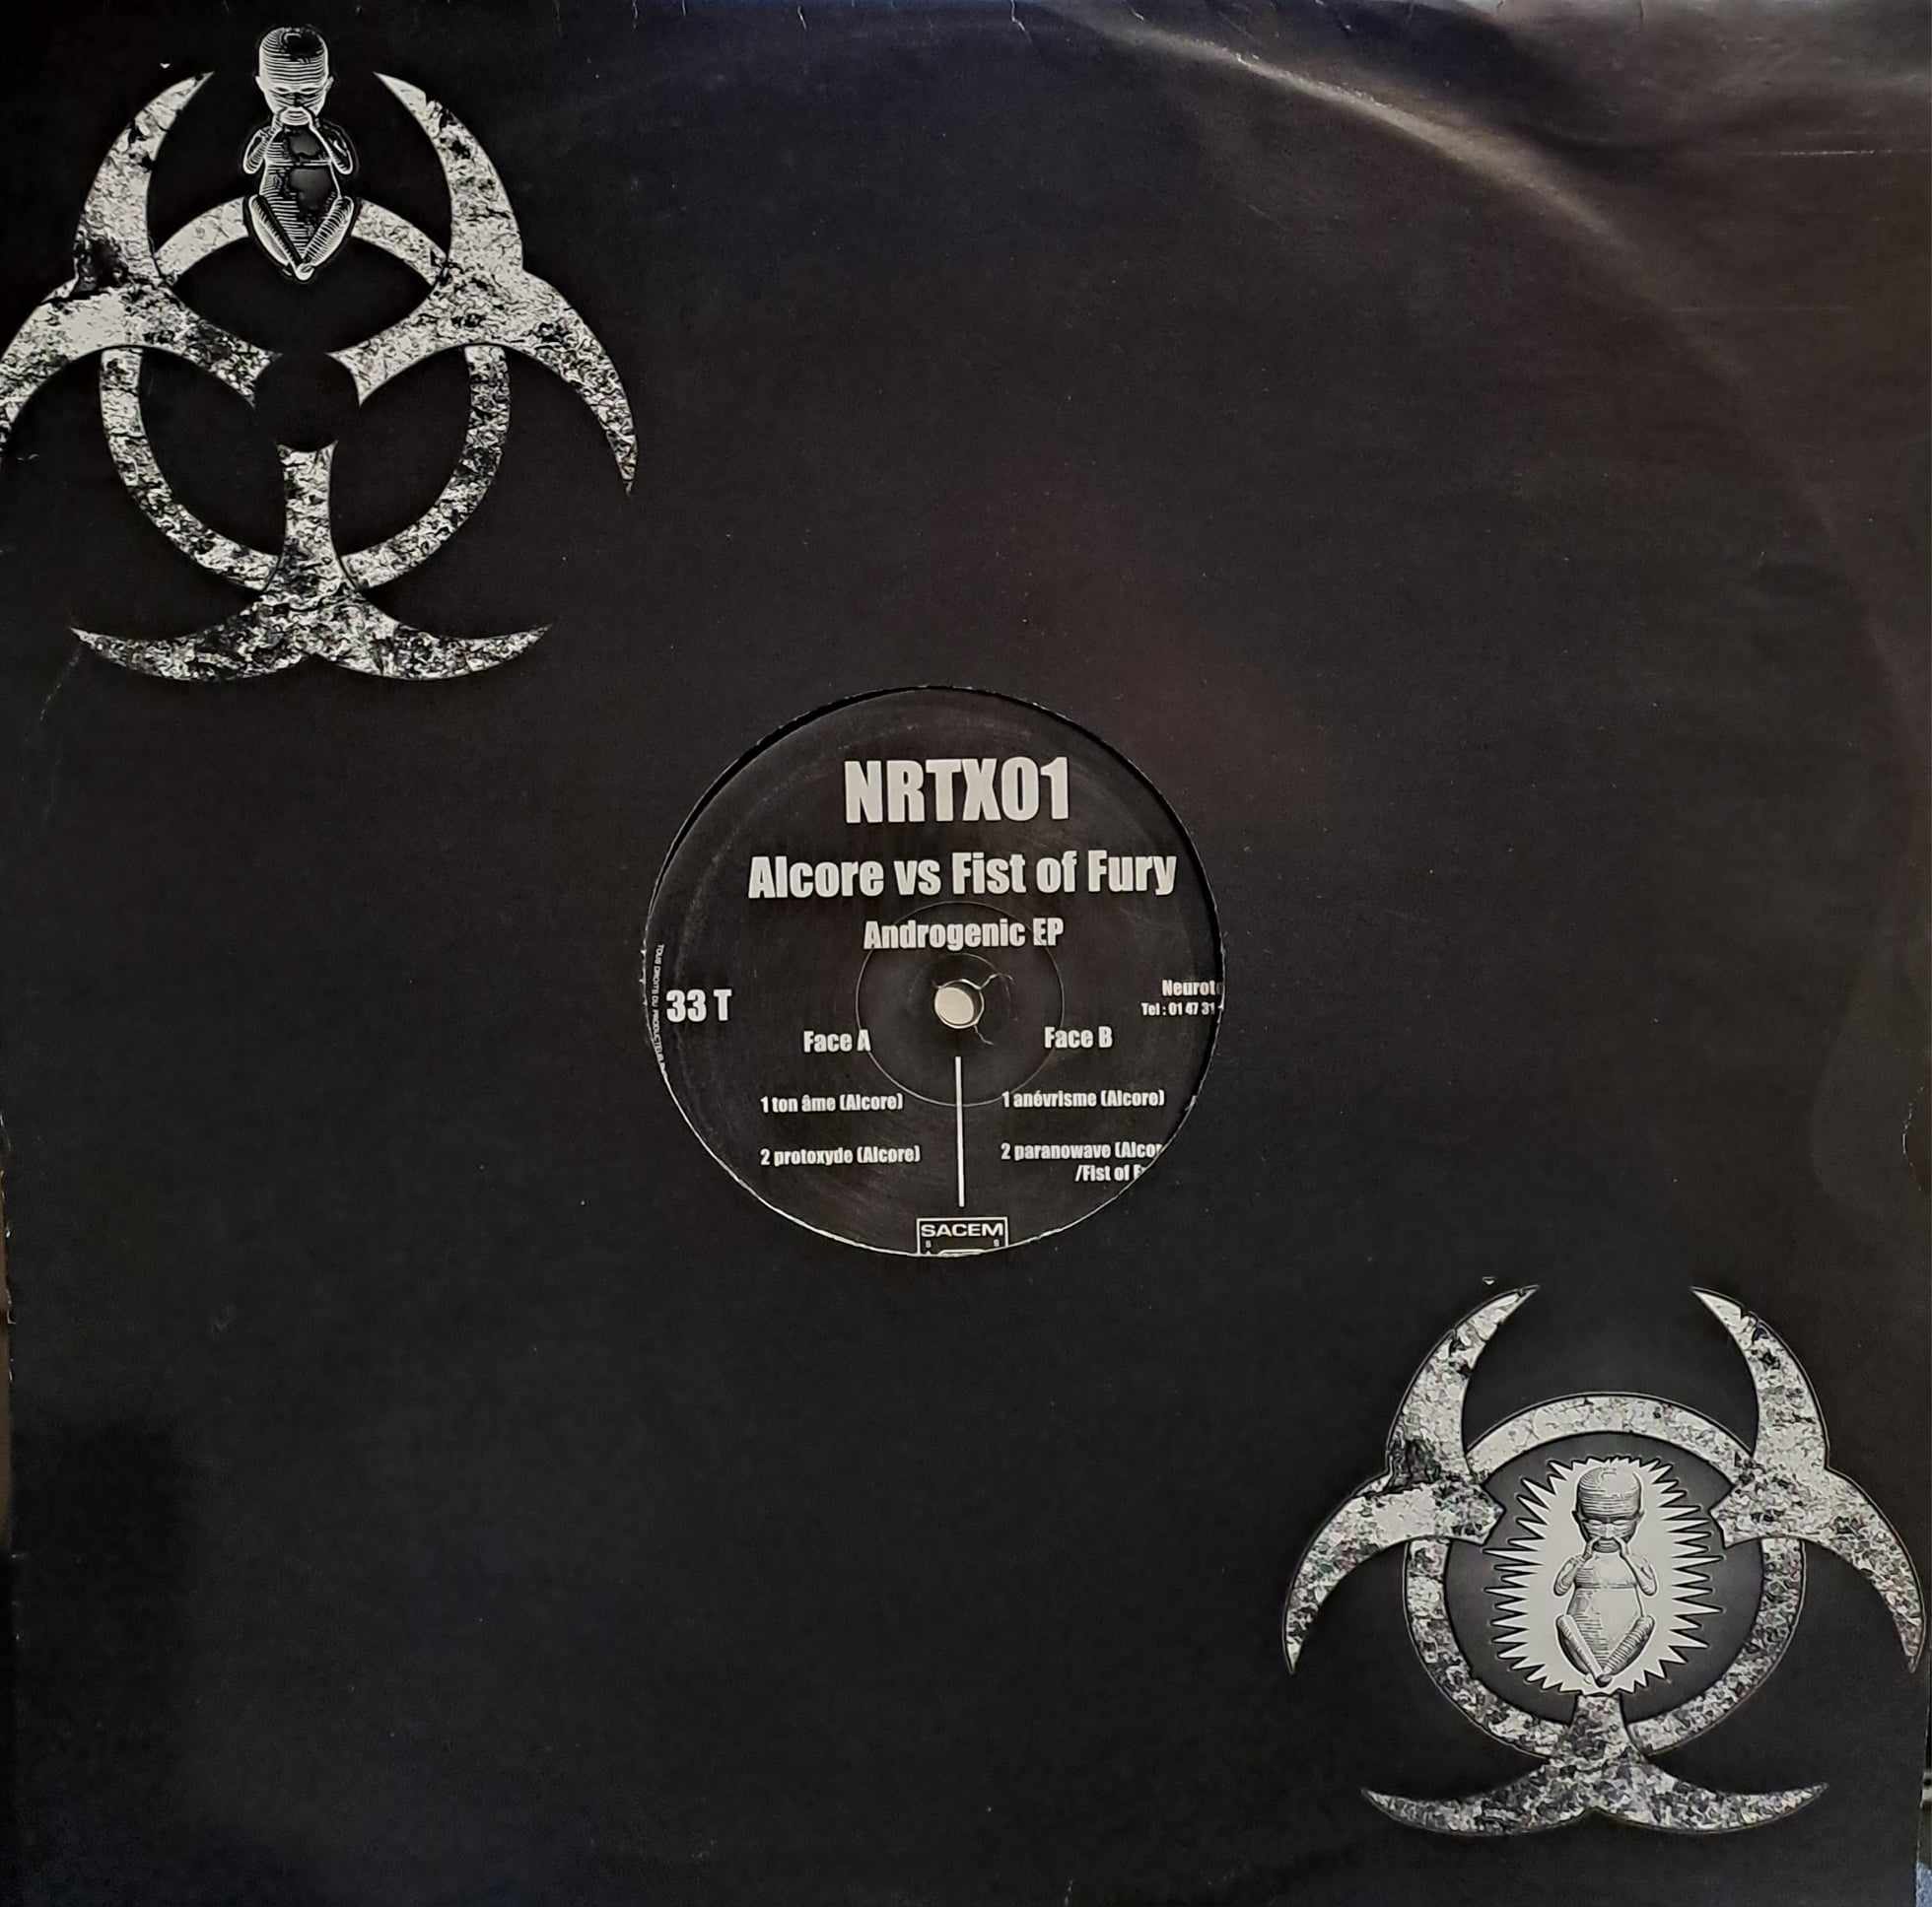 Neurotoxic 01 - vinyle hardcore